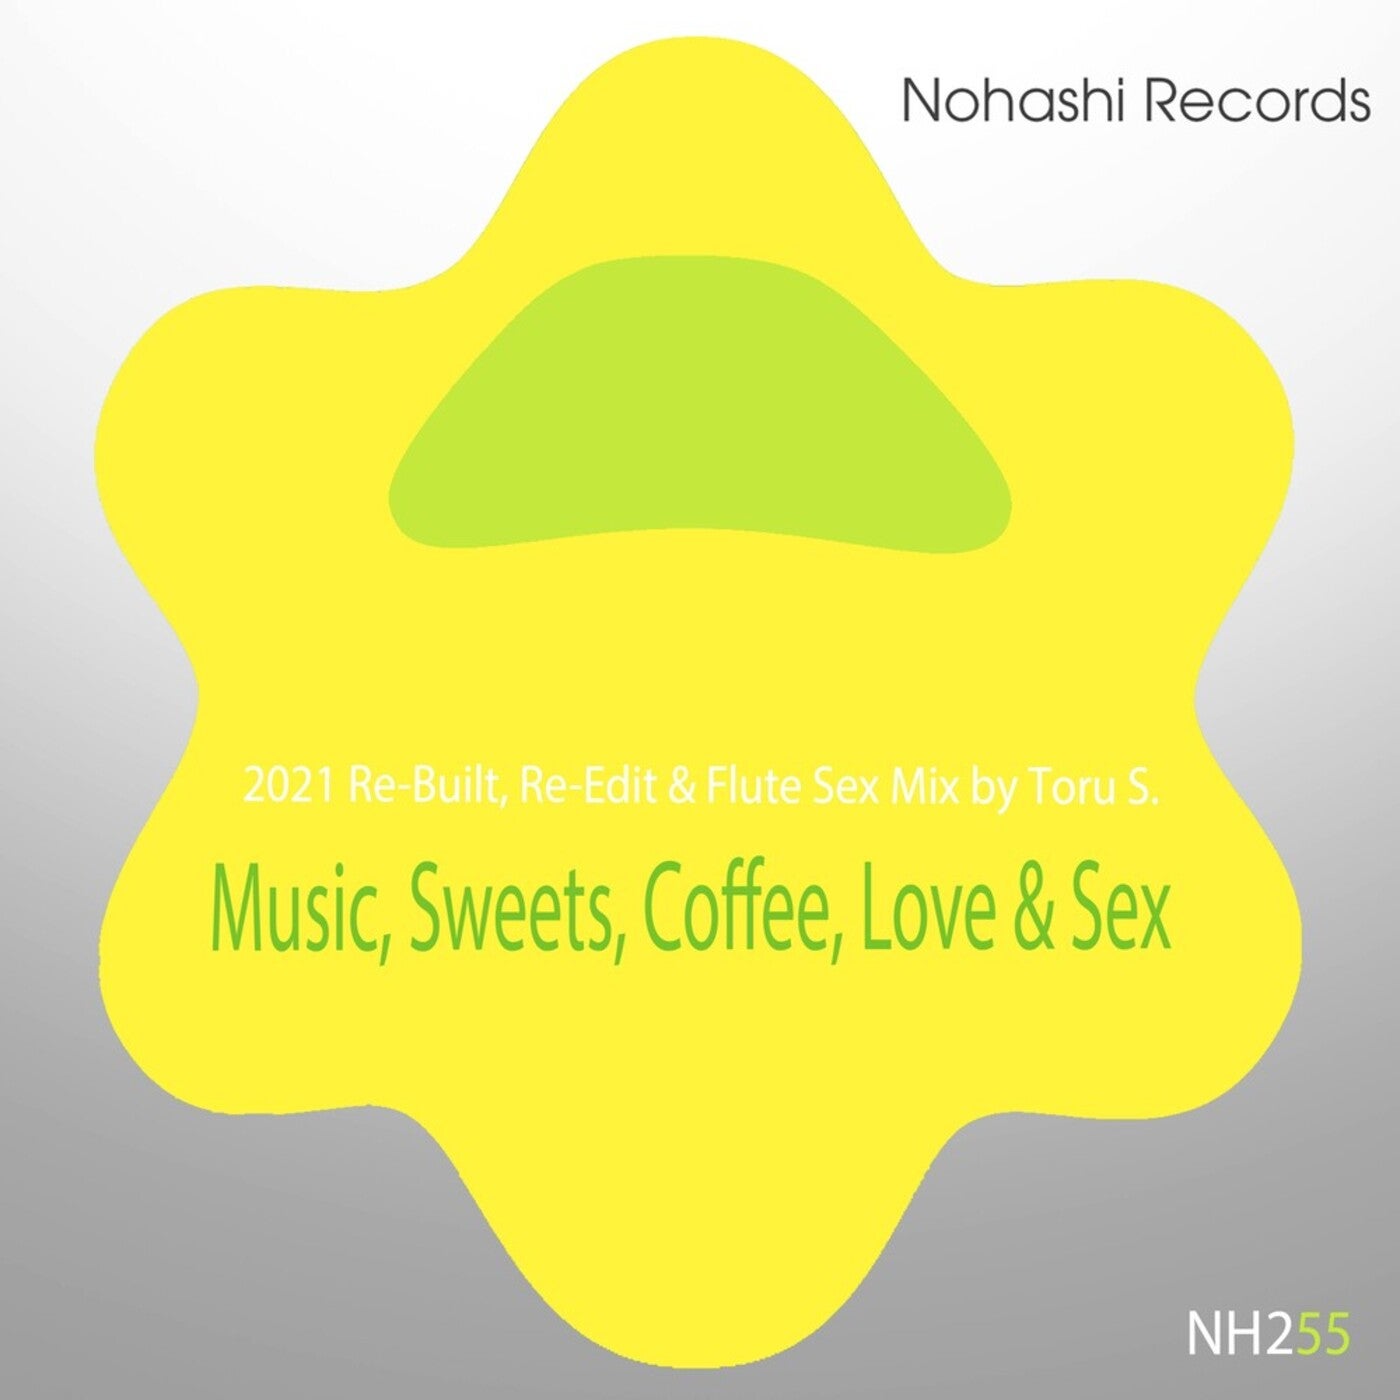 Music, Sweets, Coffee, Love & Sex